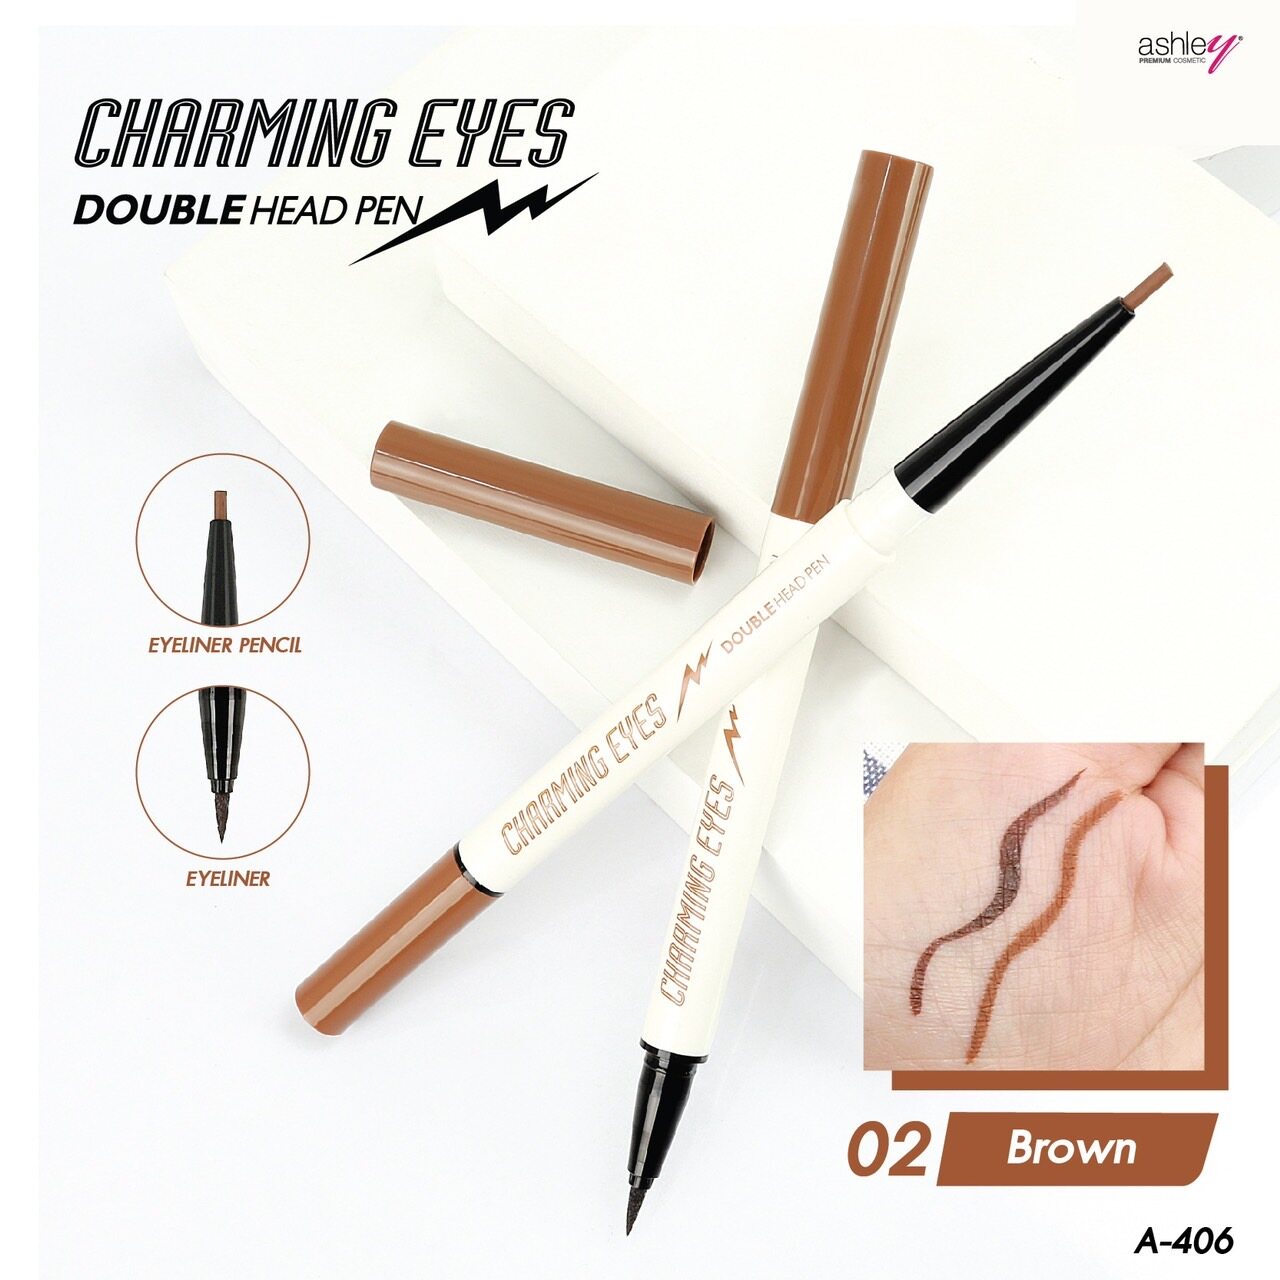 Ashley Charming Eyes Double Head Pen No.02 Brown A-406-02